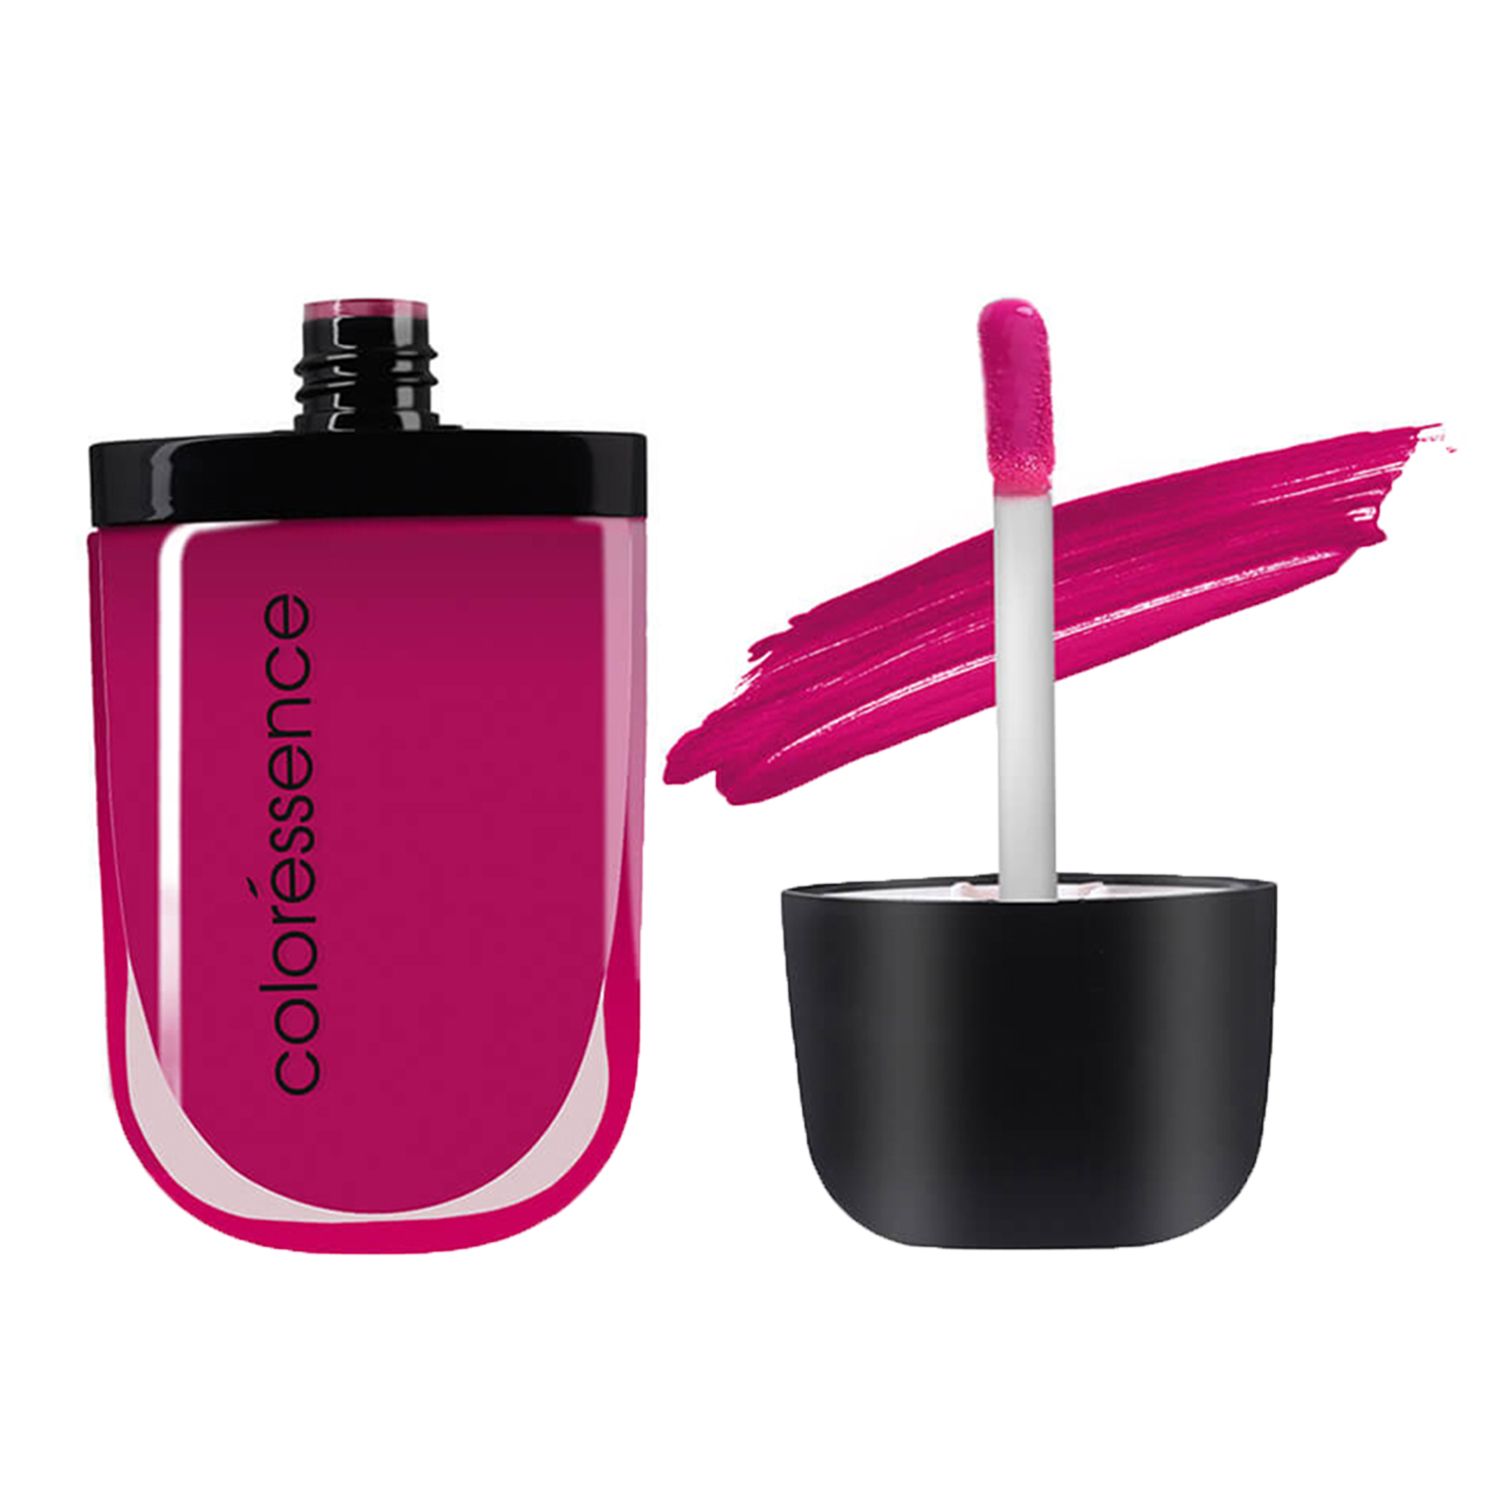 Coloressence Intense Liquid Lip Color, Matte Finish, 8ml-Berry Pink LLC 3